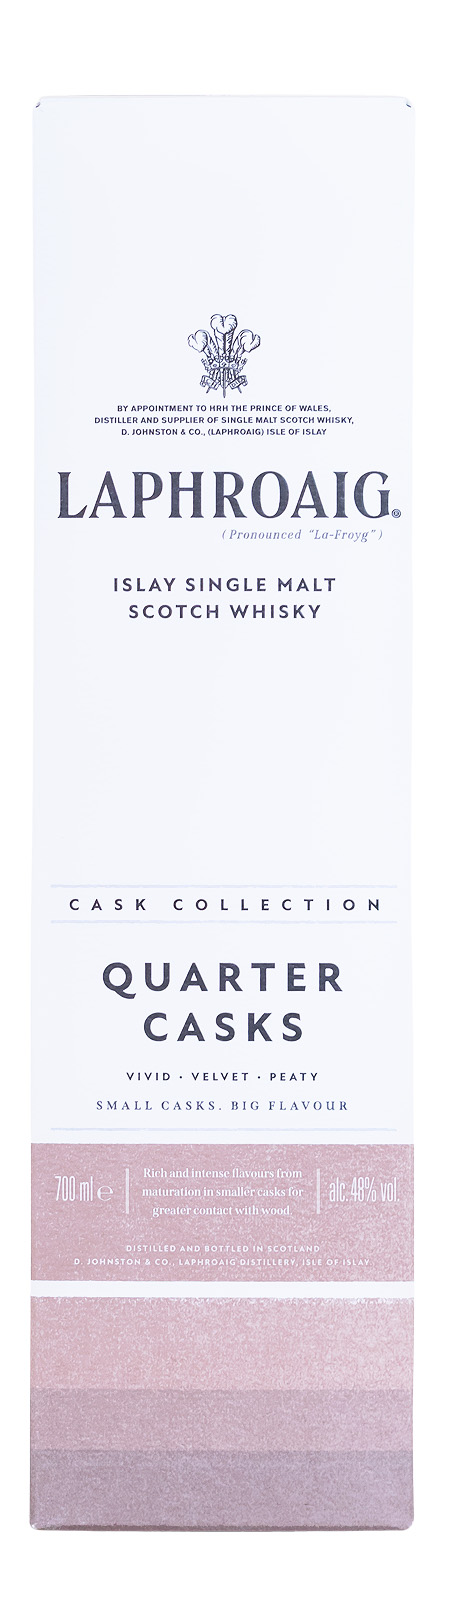 Laphroaig Quarter Cask Islay Single Malt Scotch Whisky - 0,7L 48% vol